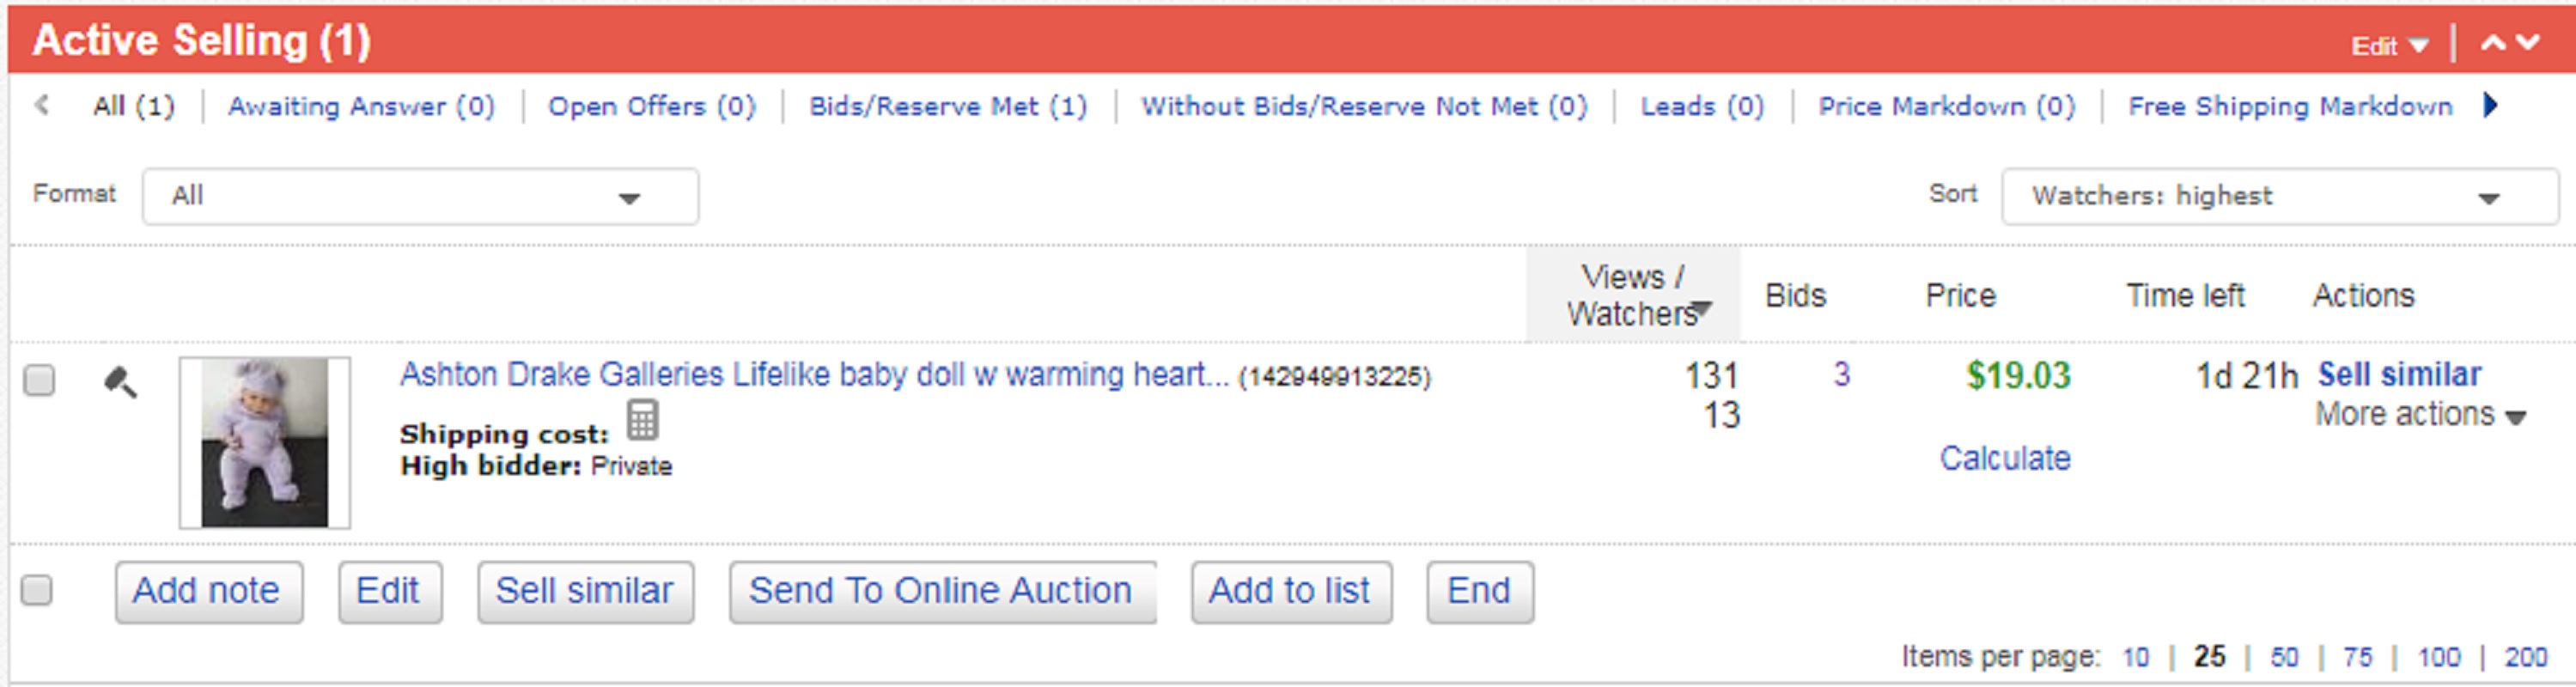 Screen cap of my ebay auction for Moms Ashton Drake warming heart doll